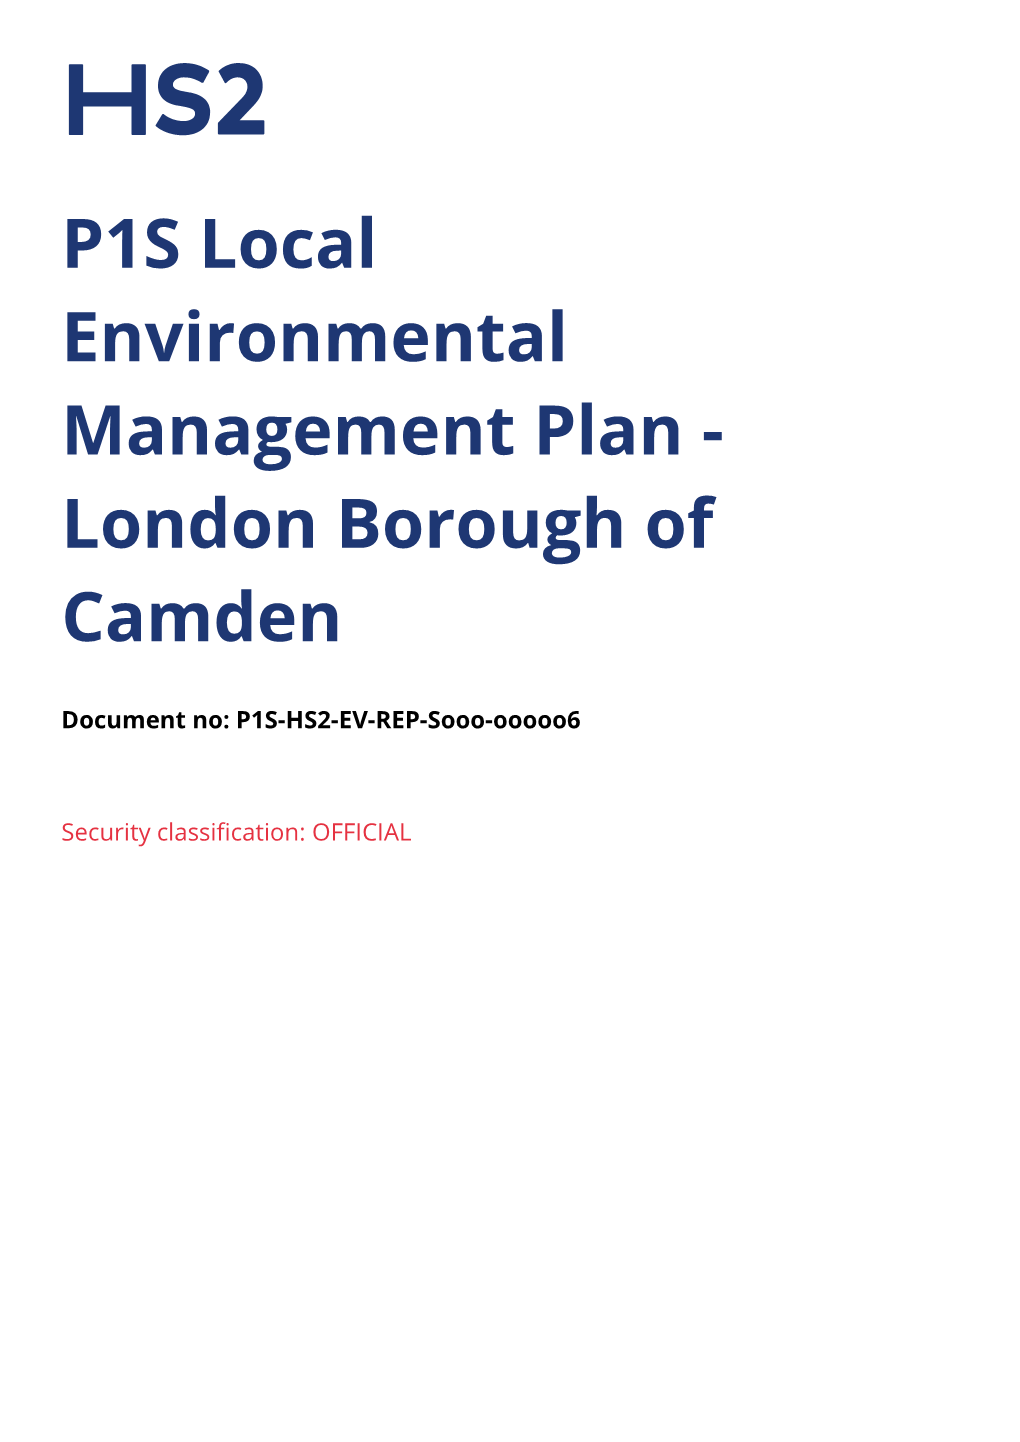 P1S Local Environmental Management Plan - London Borough of Camden